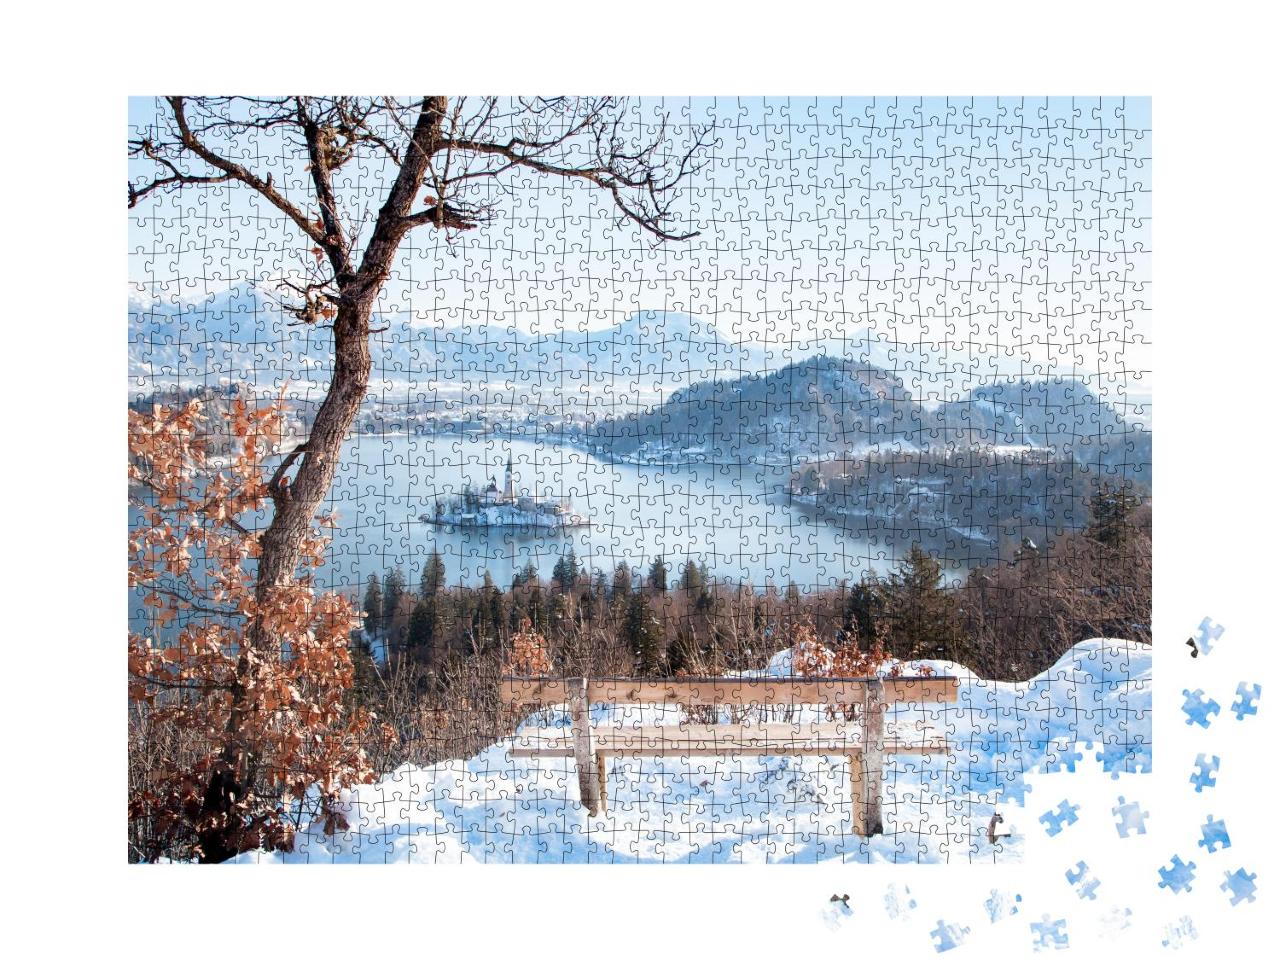 Puzzle 1000 Teile „Blick auf den berühmten Bleder See mit der Insel Bled, Slowenien“